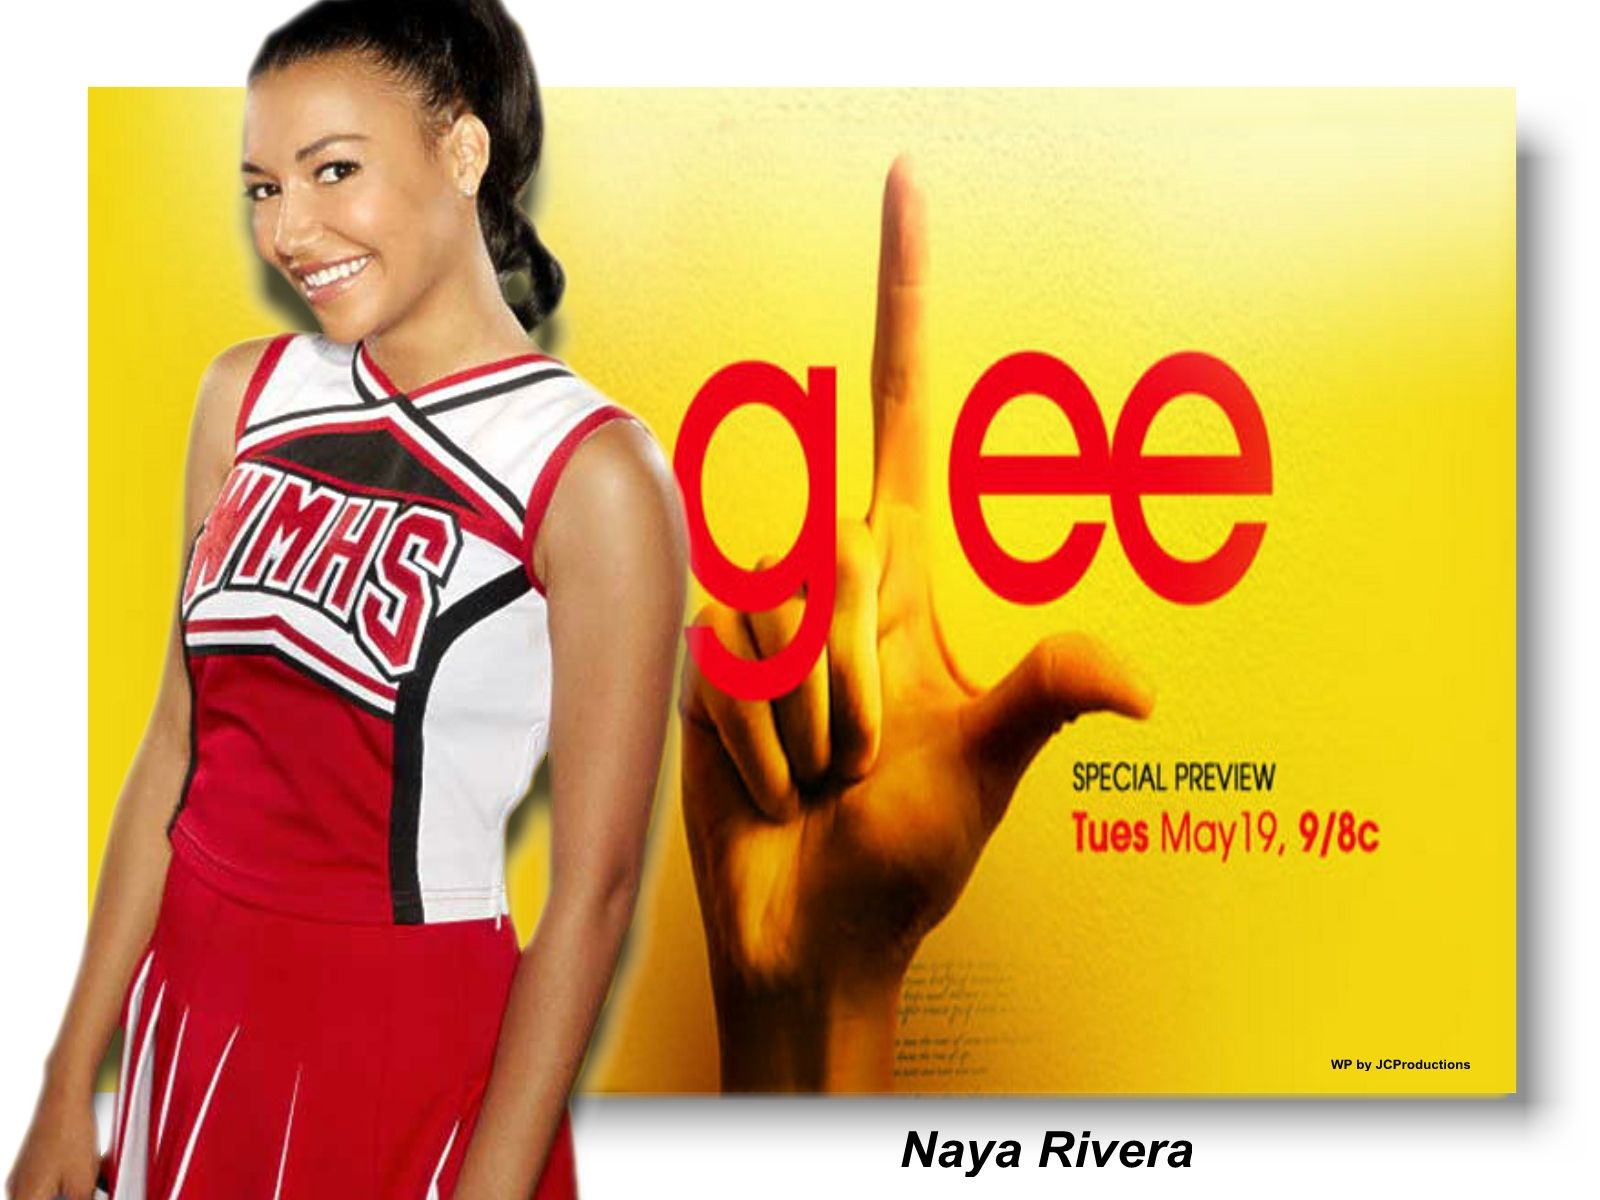 The Glee Girls Image Naya Rivera Of Glee HD Wallpaper Player Wallpaper & Background Download